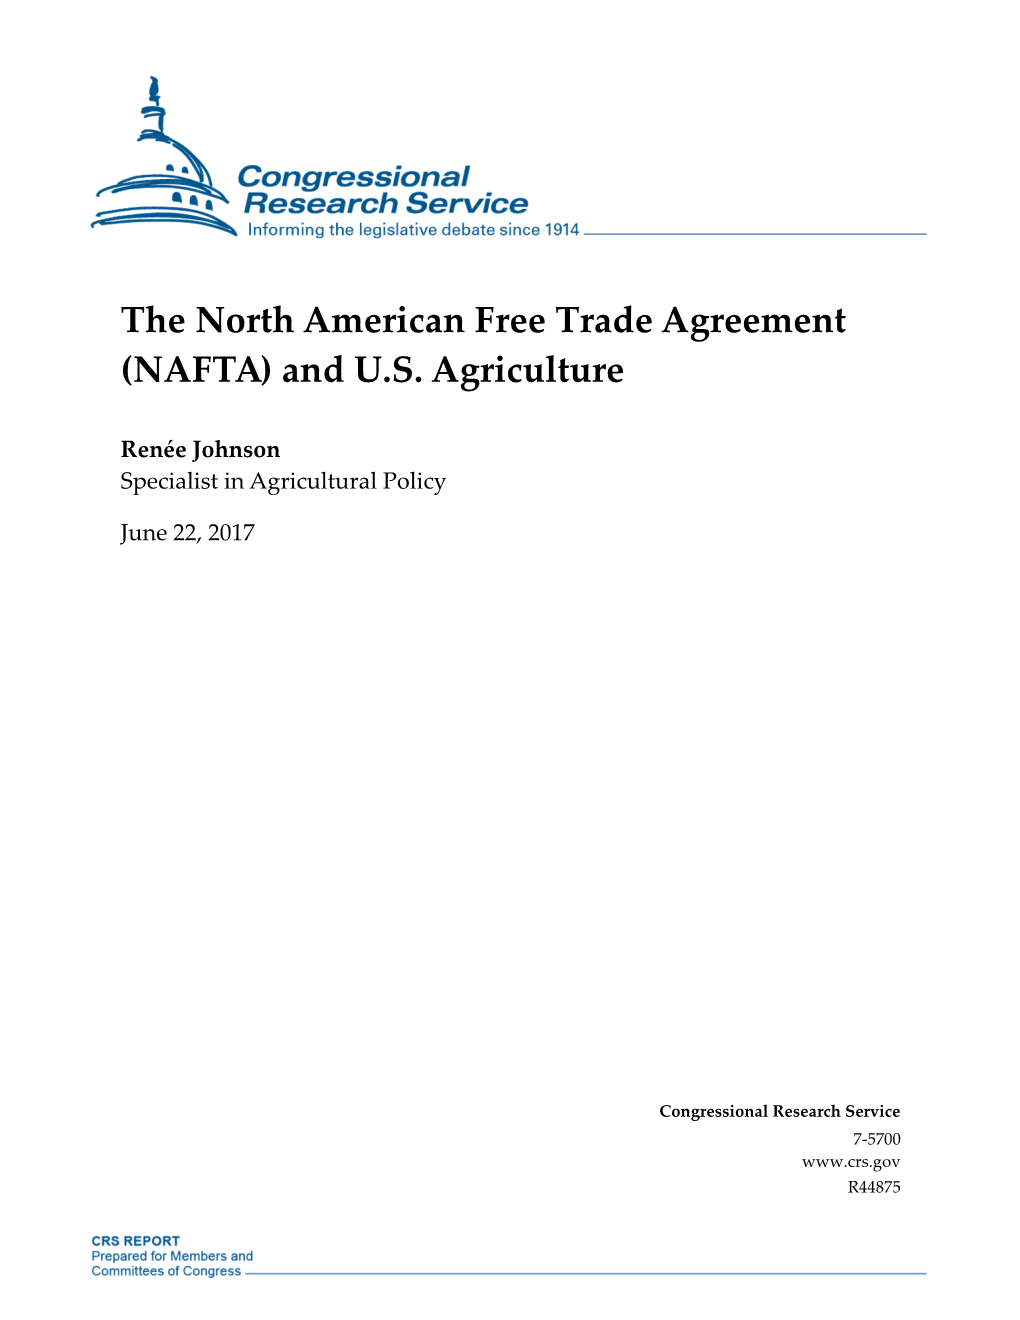 The North American Free Trade Agreement (NAFTA) and U.S